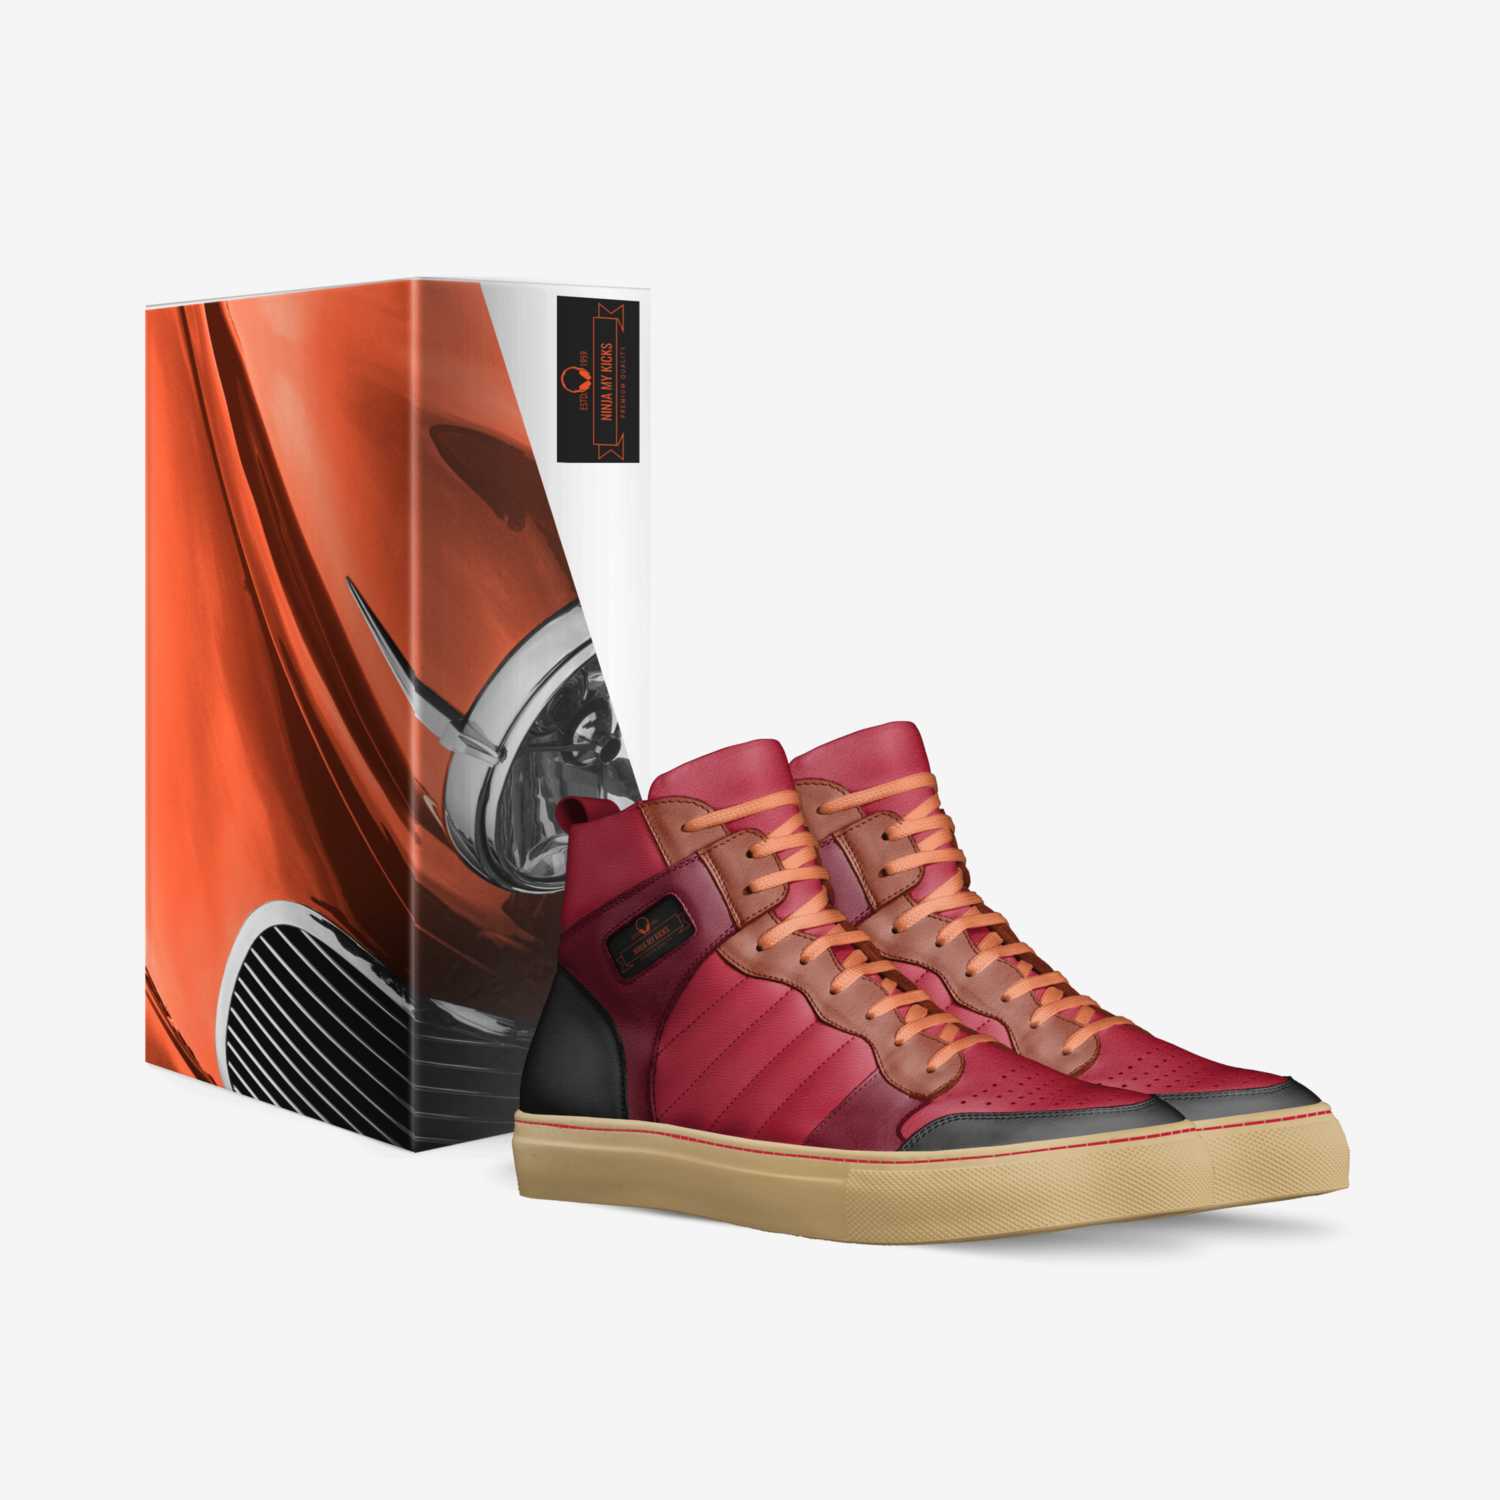 Ninja My Kicks custom made in Italy shoes by Michael Brown | Box view